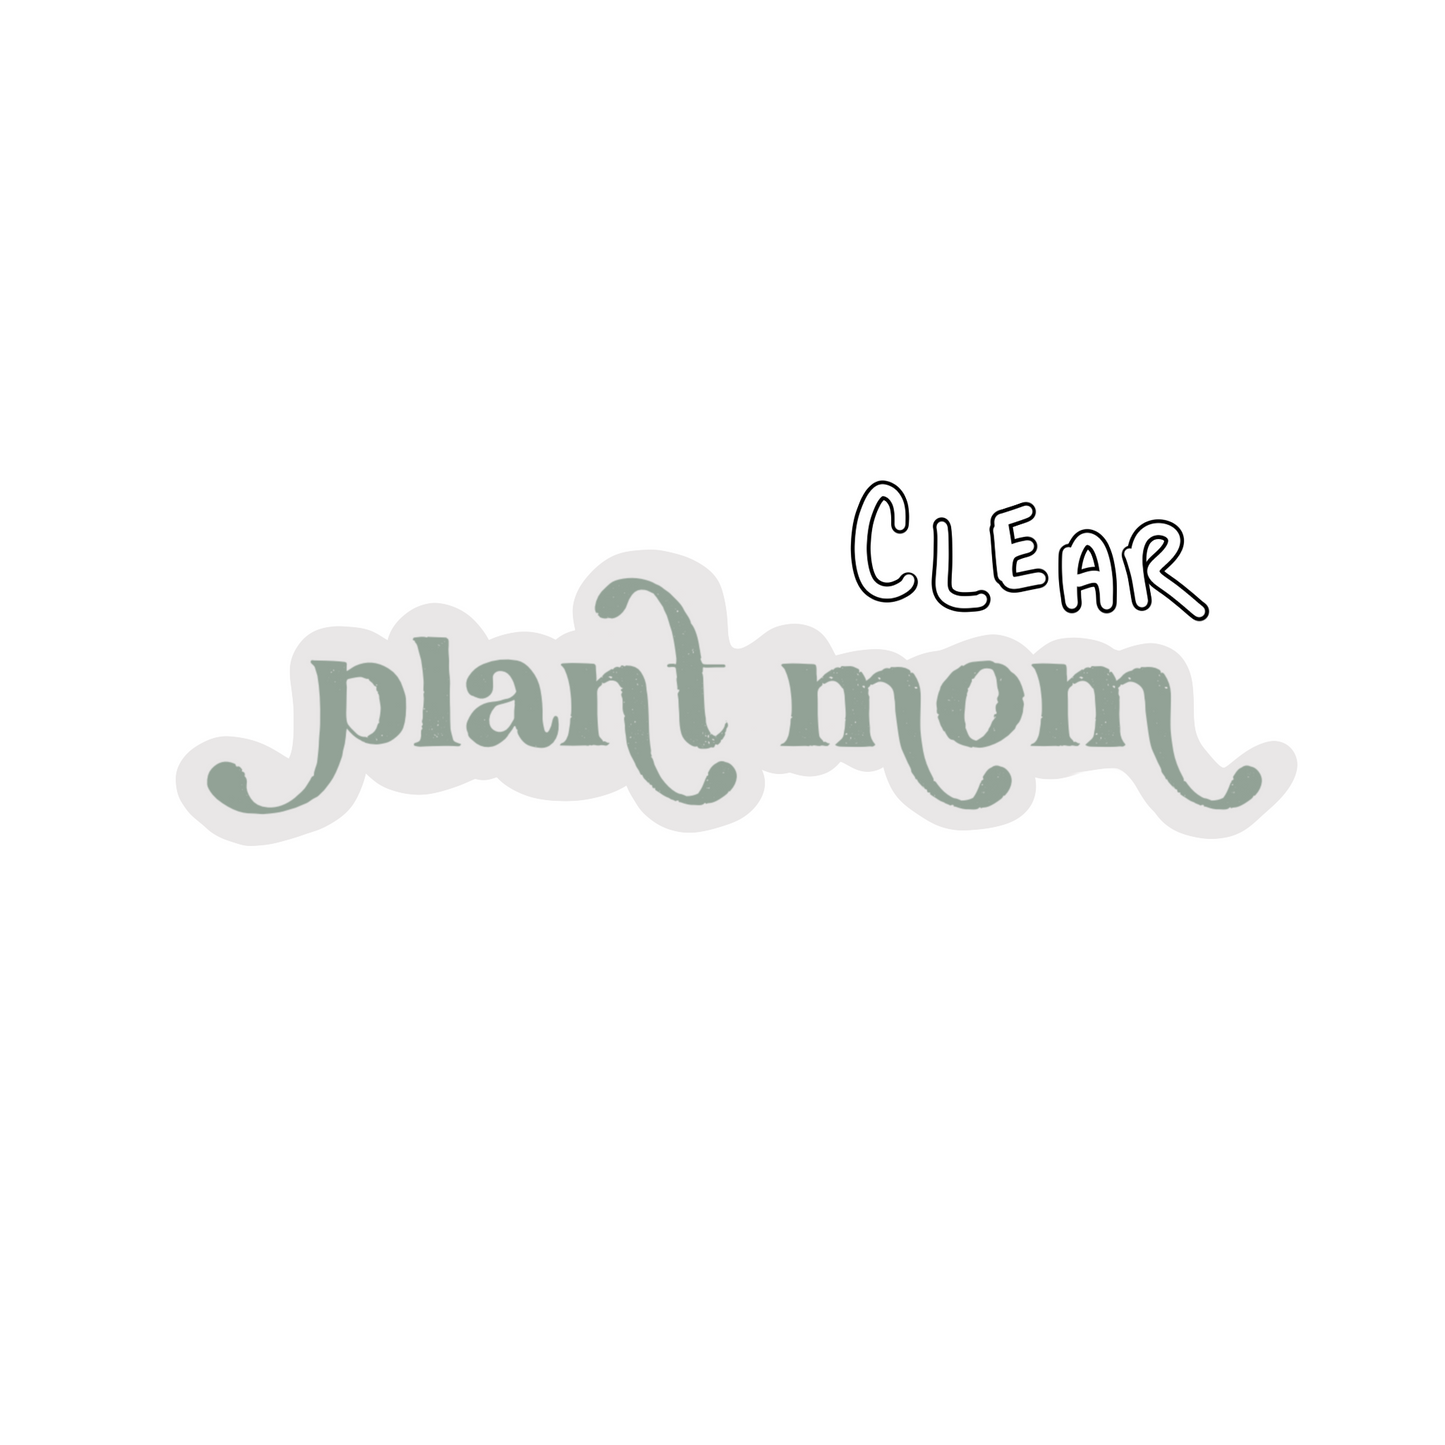 CLEAR Plant Mom Sticker